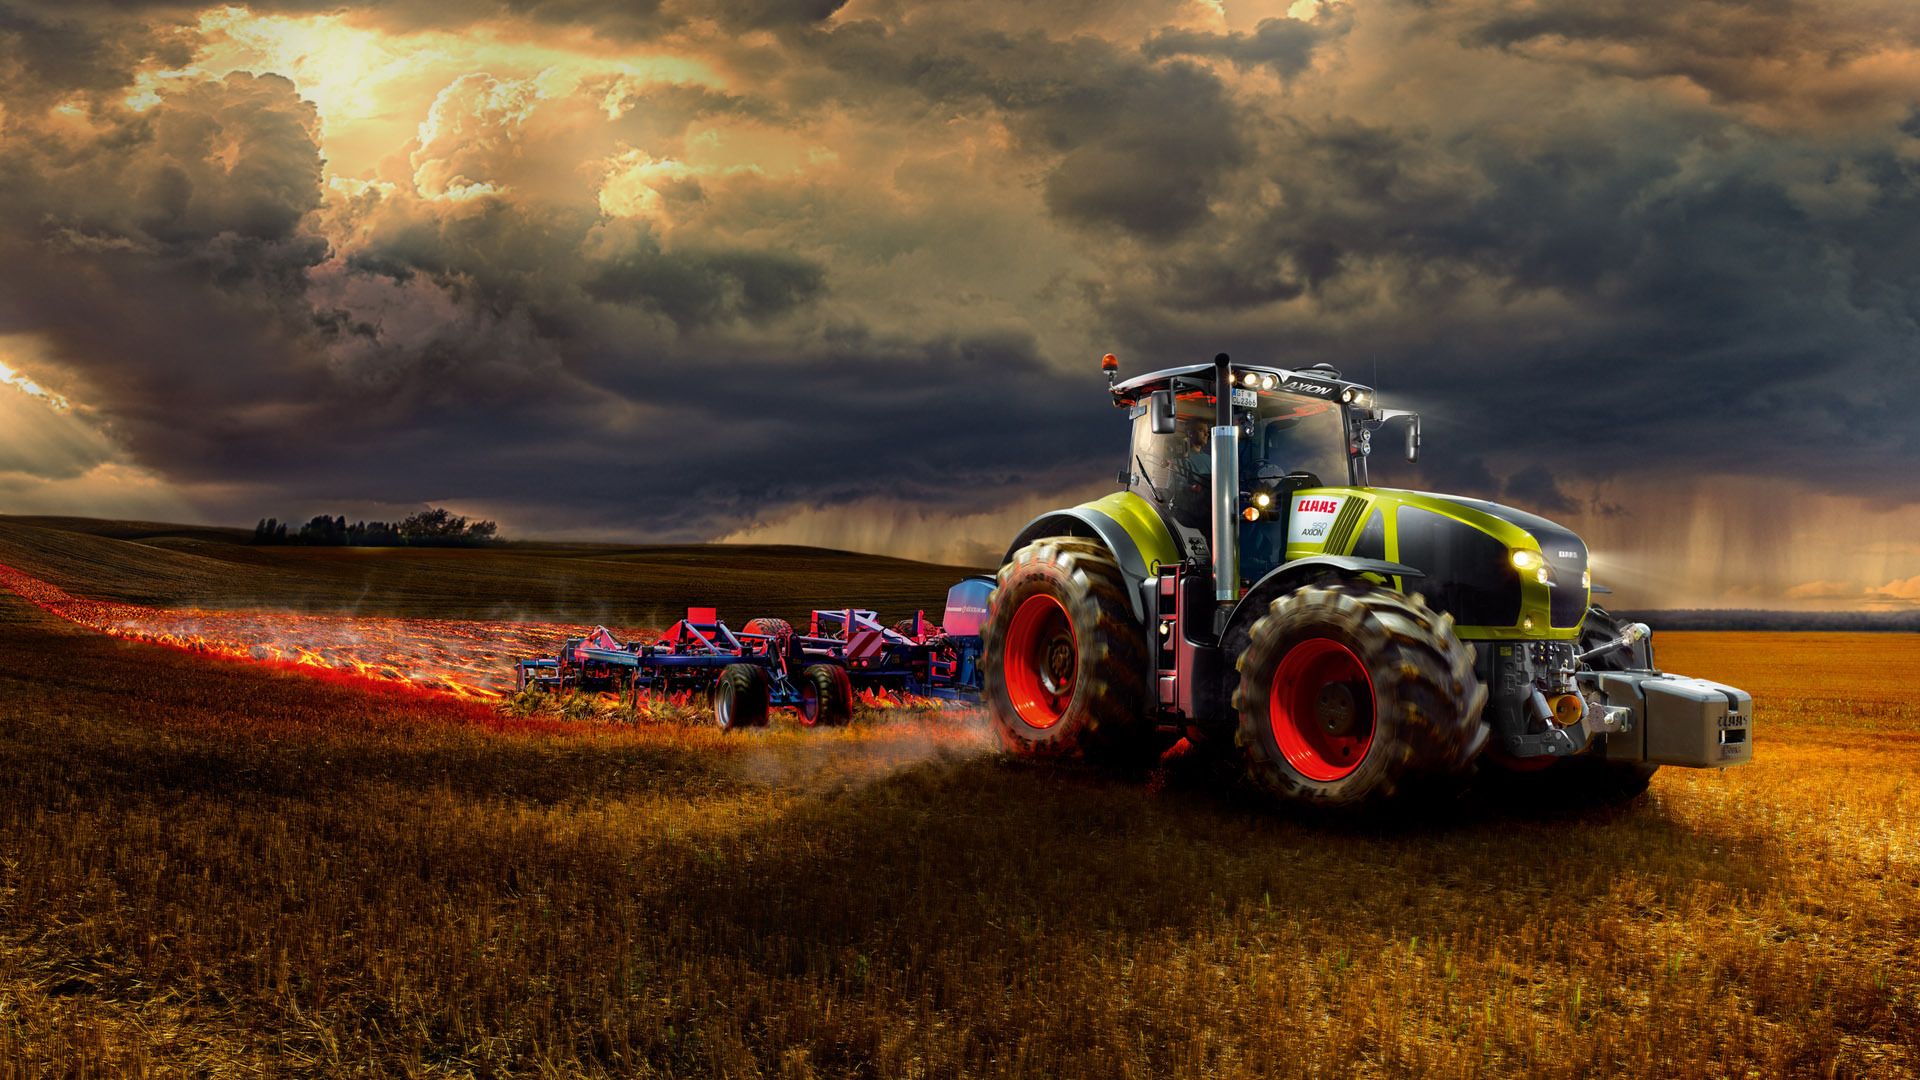 Claas Axion Tractor Farm Landscape Wallpaper Tractors